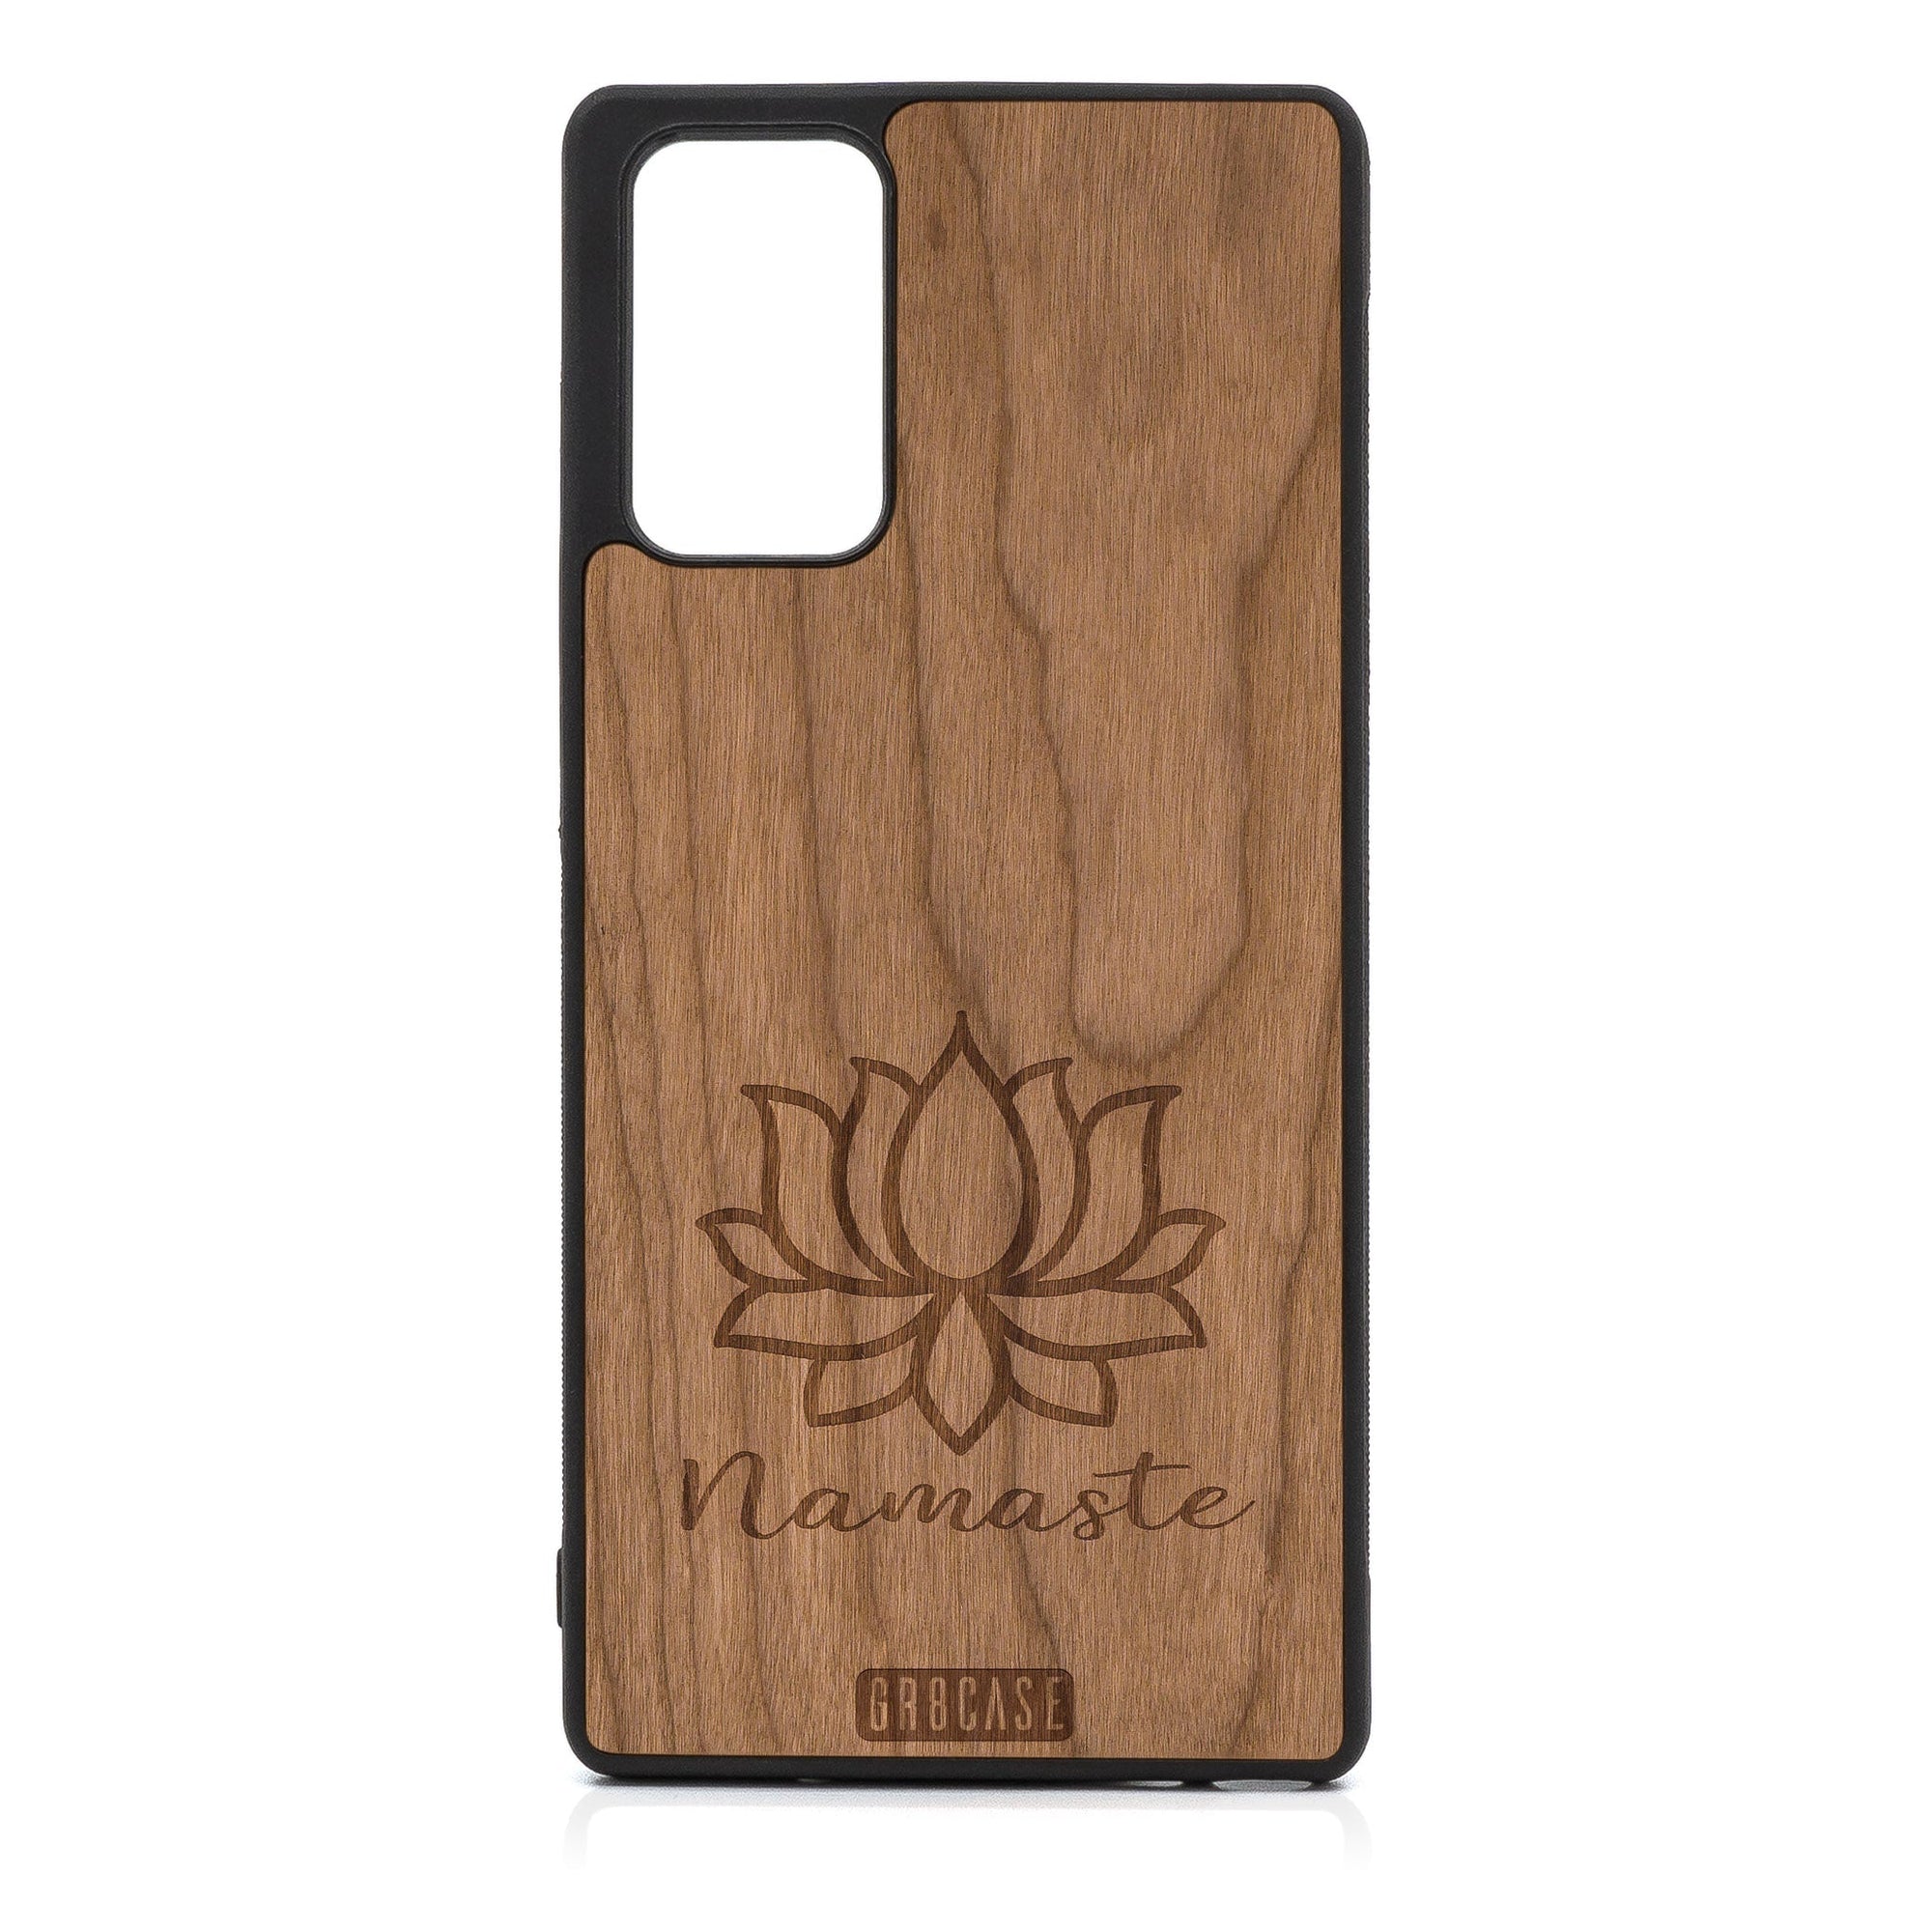 Namaste (Lotus Flower) Design Wood Case For Samsung Galaxy A71 5G